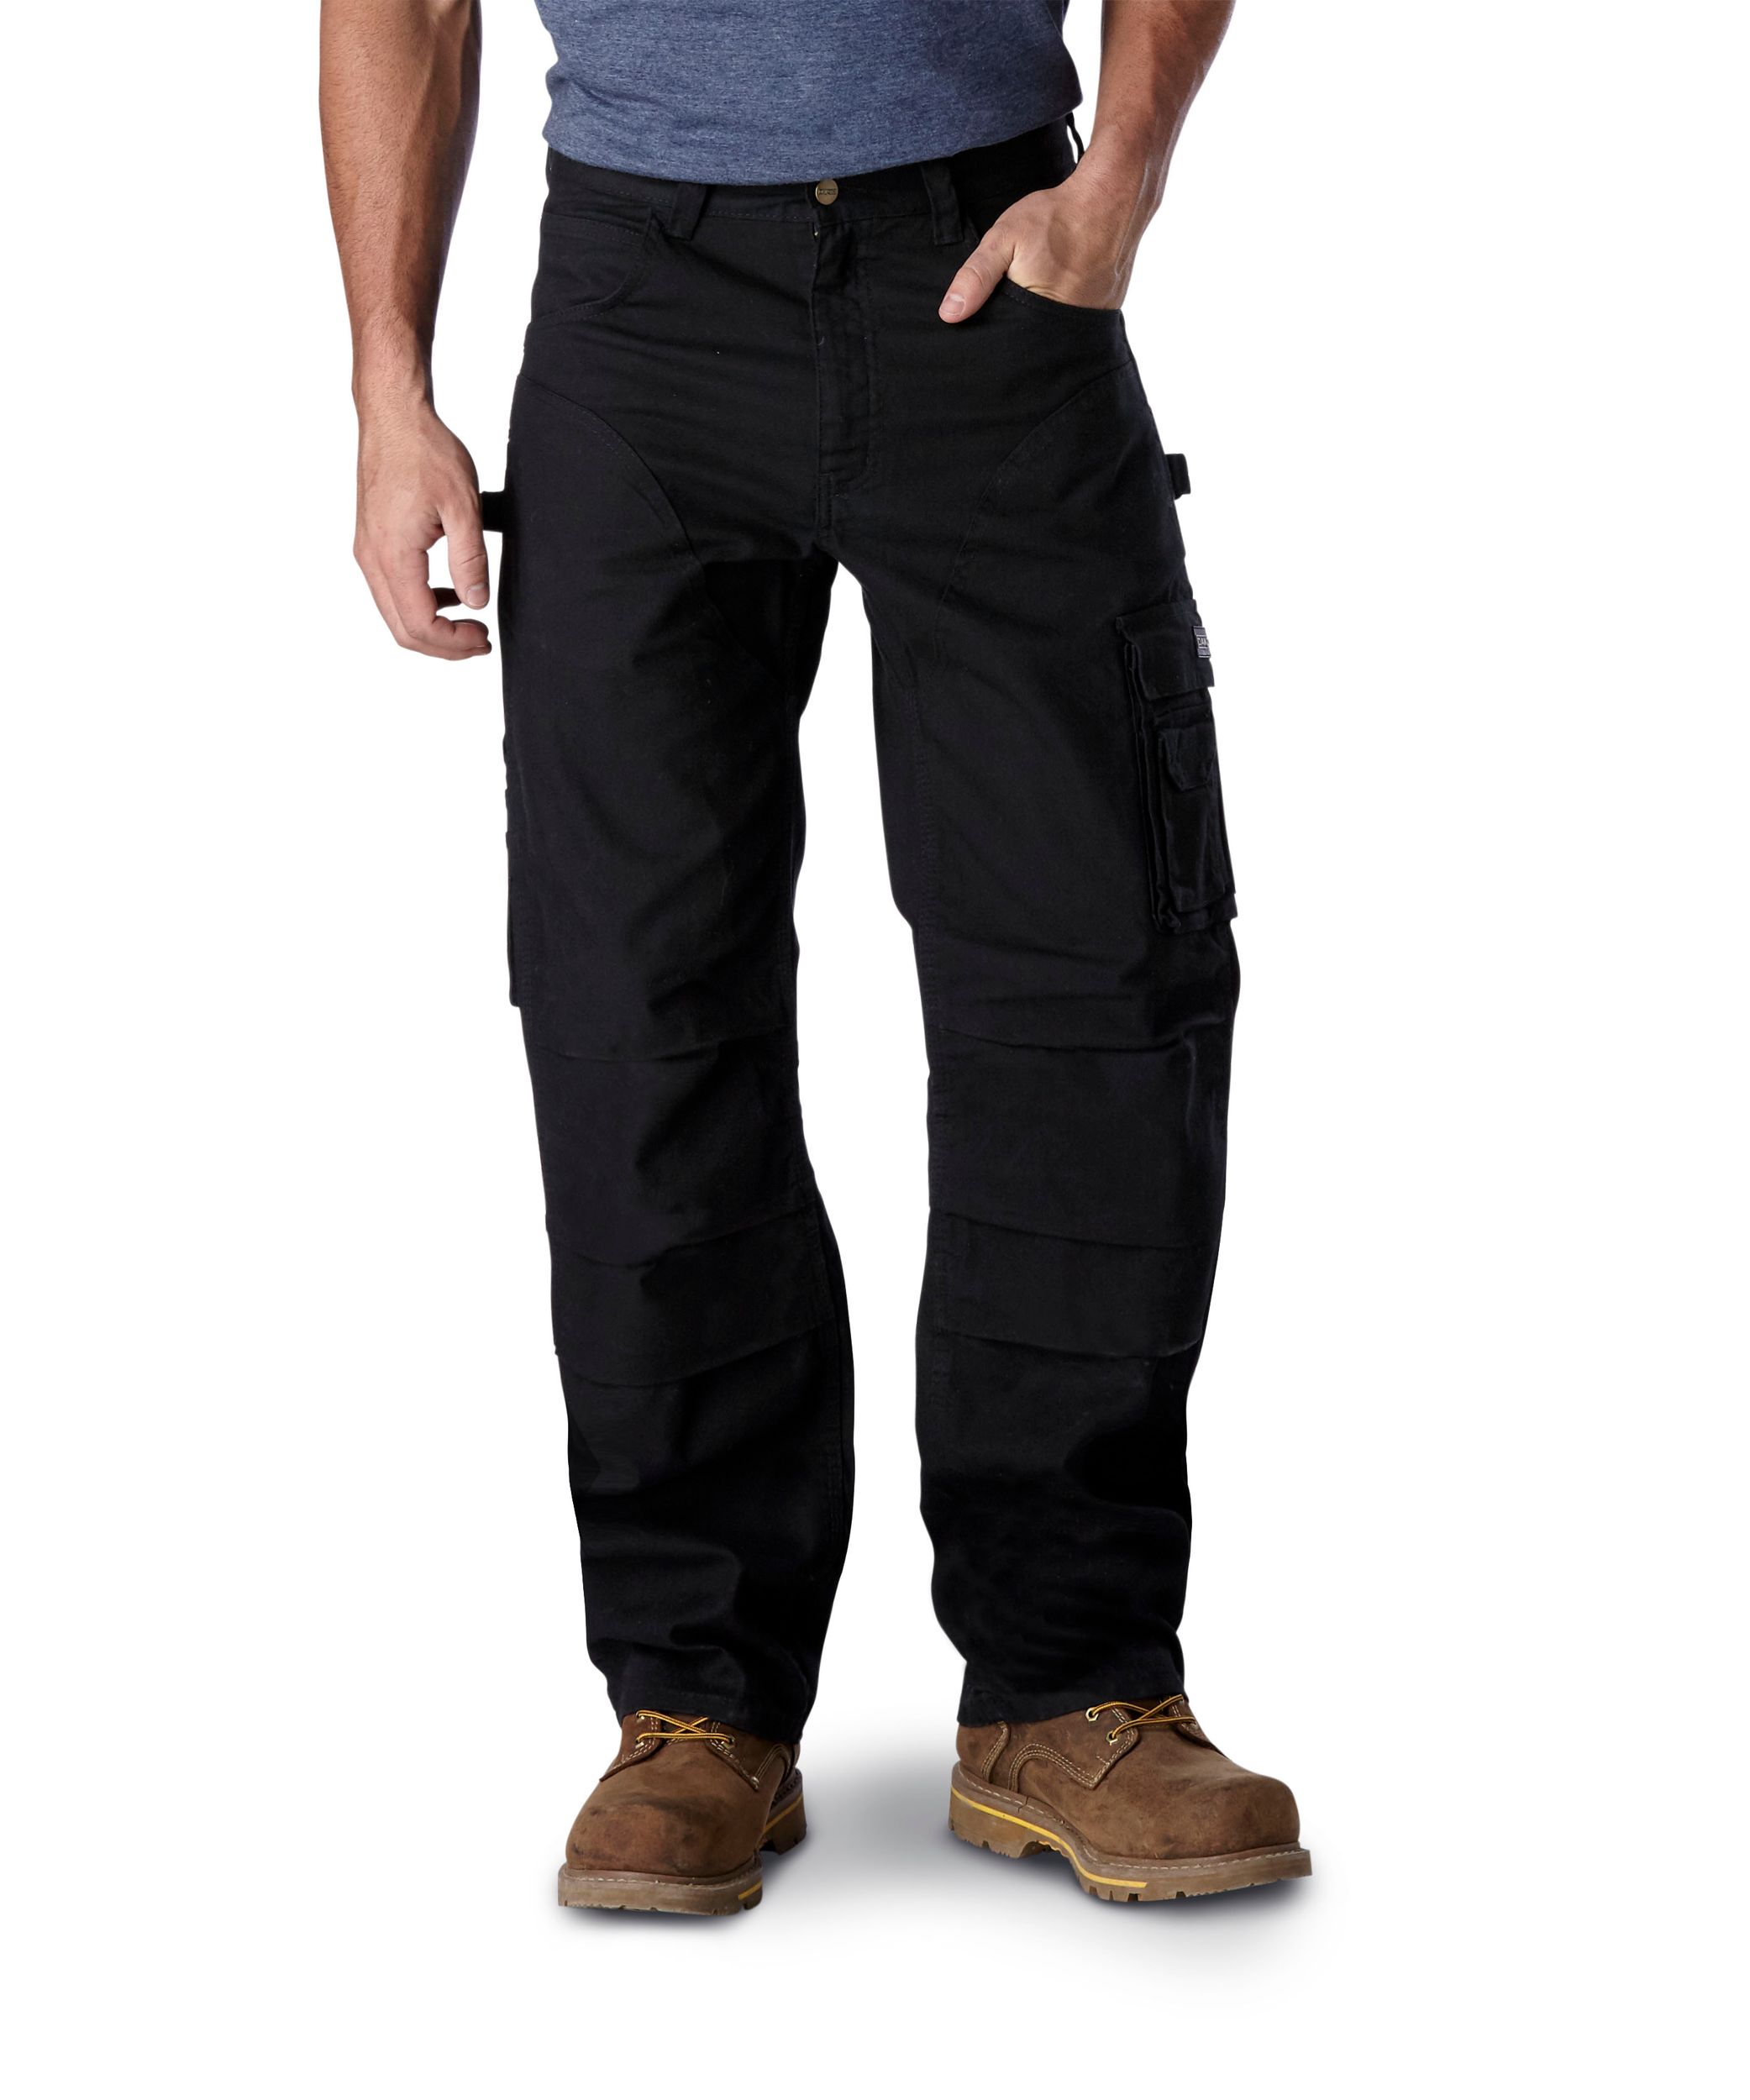 Pro RTX Pro Workwear Cargo Trousers Black  RX600  Direct Workwear